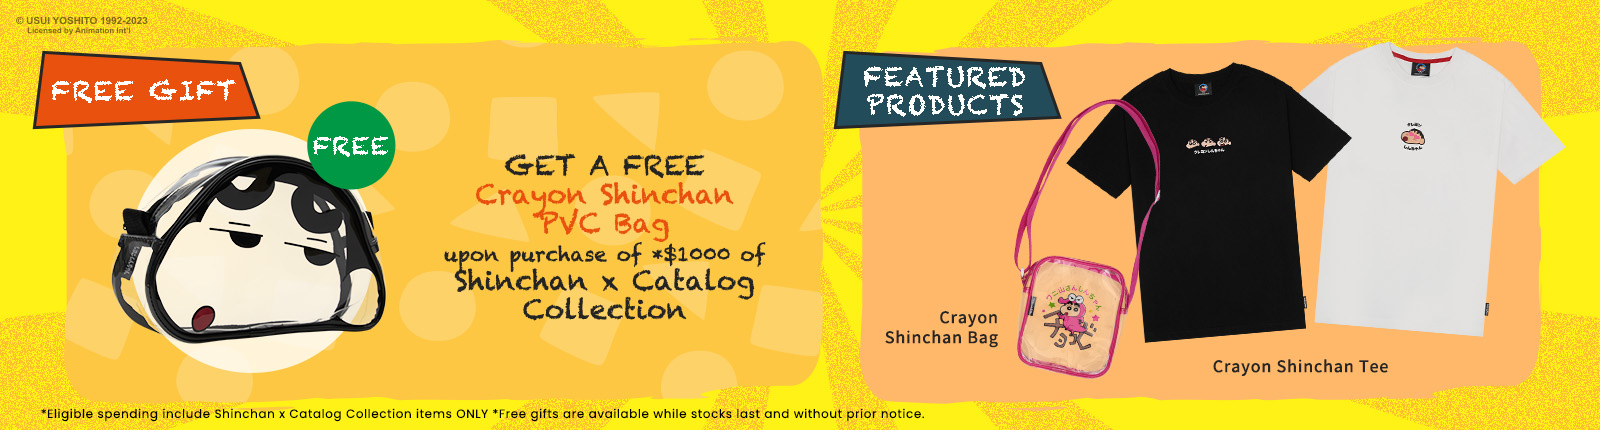 Crayon Shinchan X Catalog